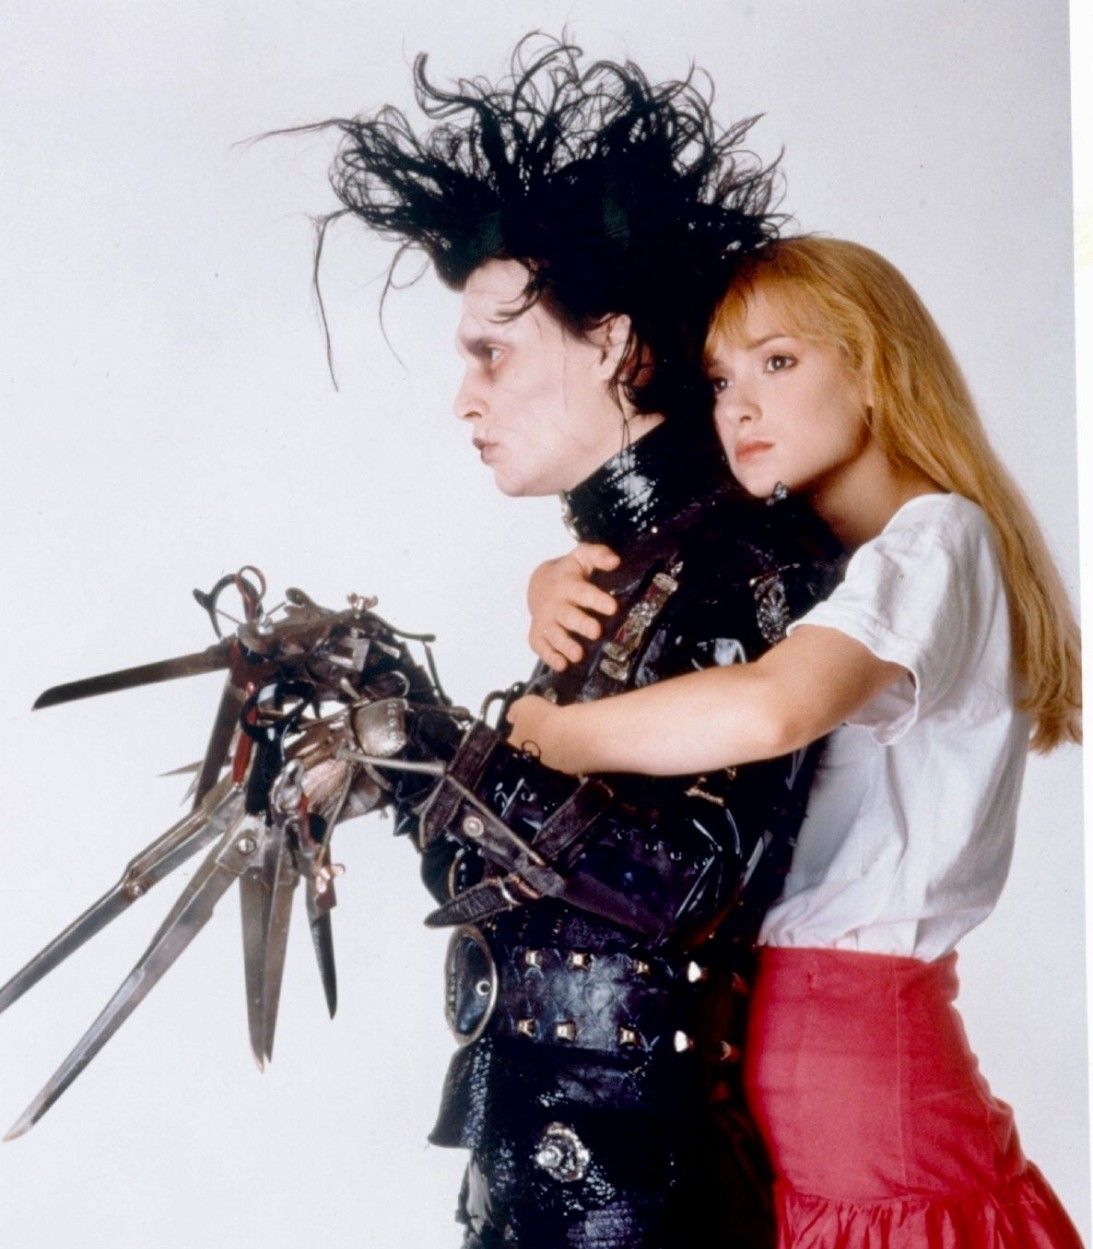 Johnny Depp and Winona Ryder Edward Scissorhands Promo Vertical